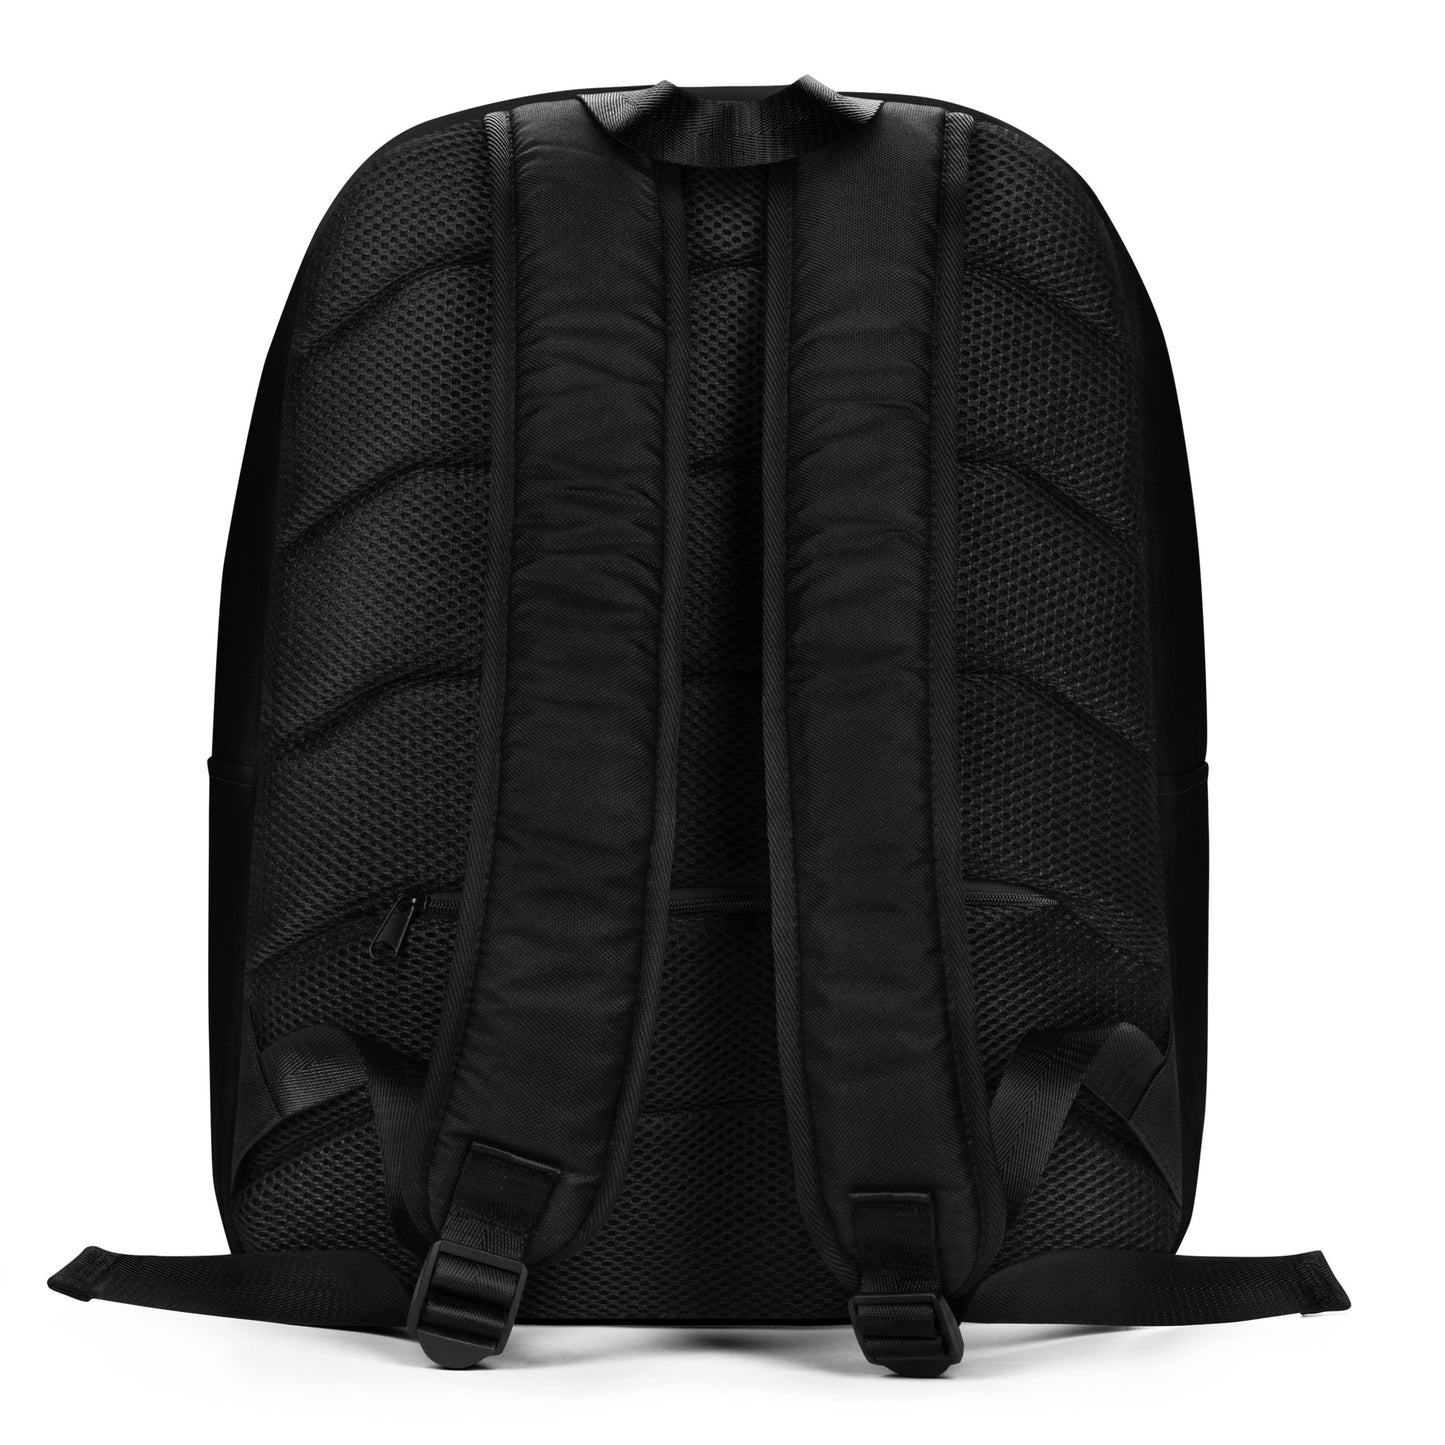 Scorpio Backpack Black